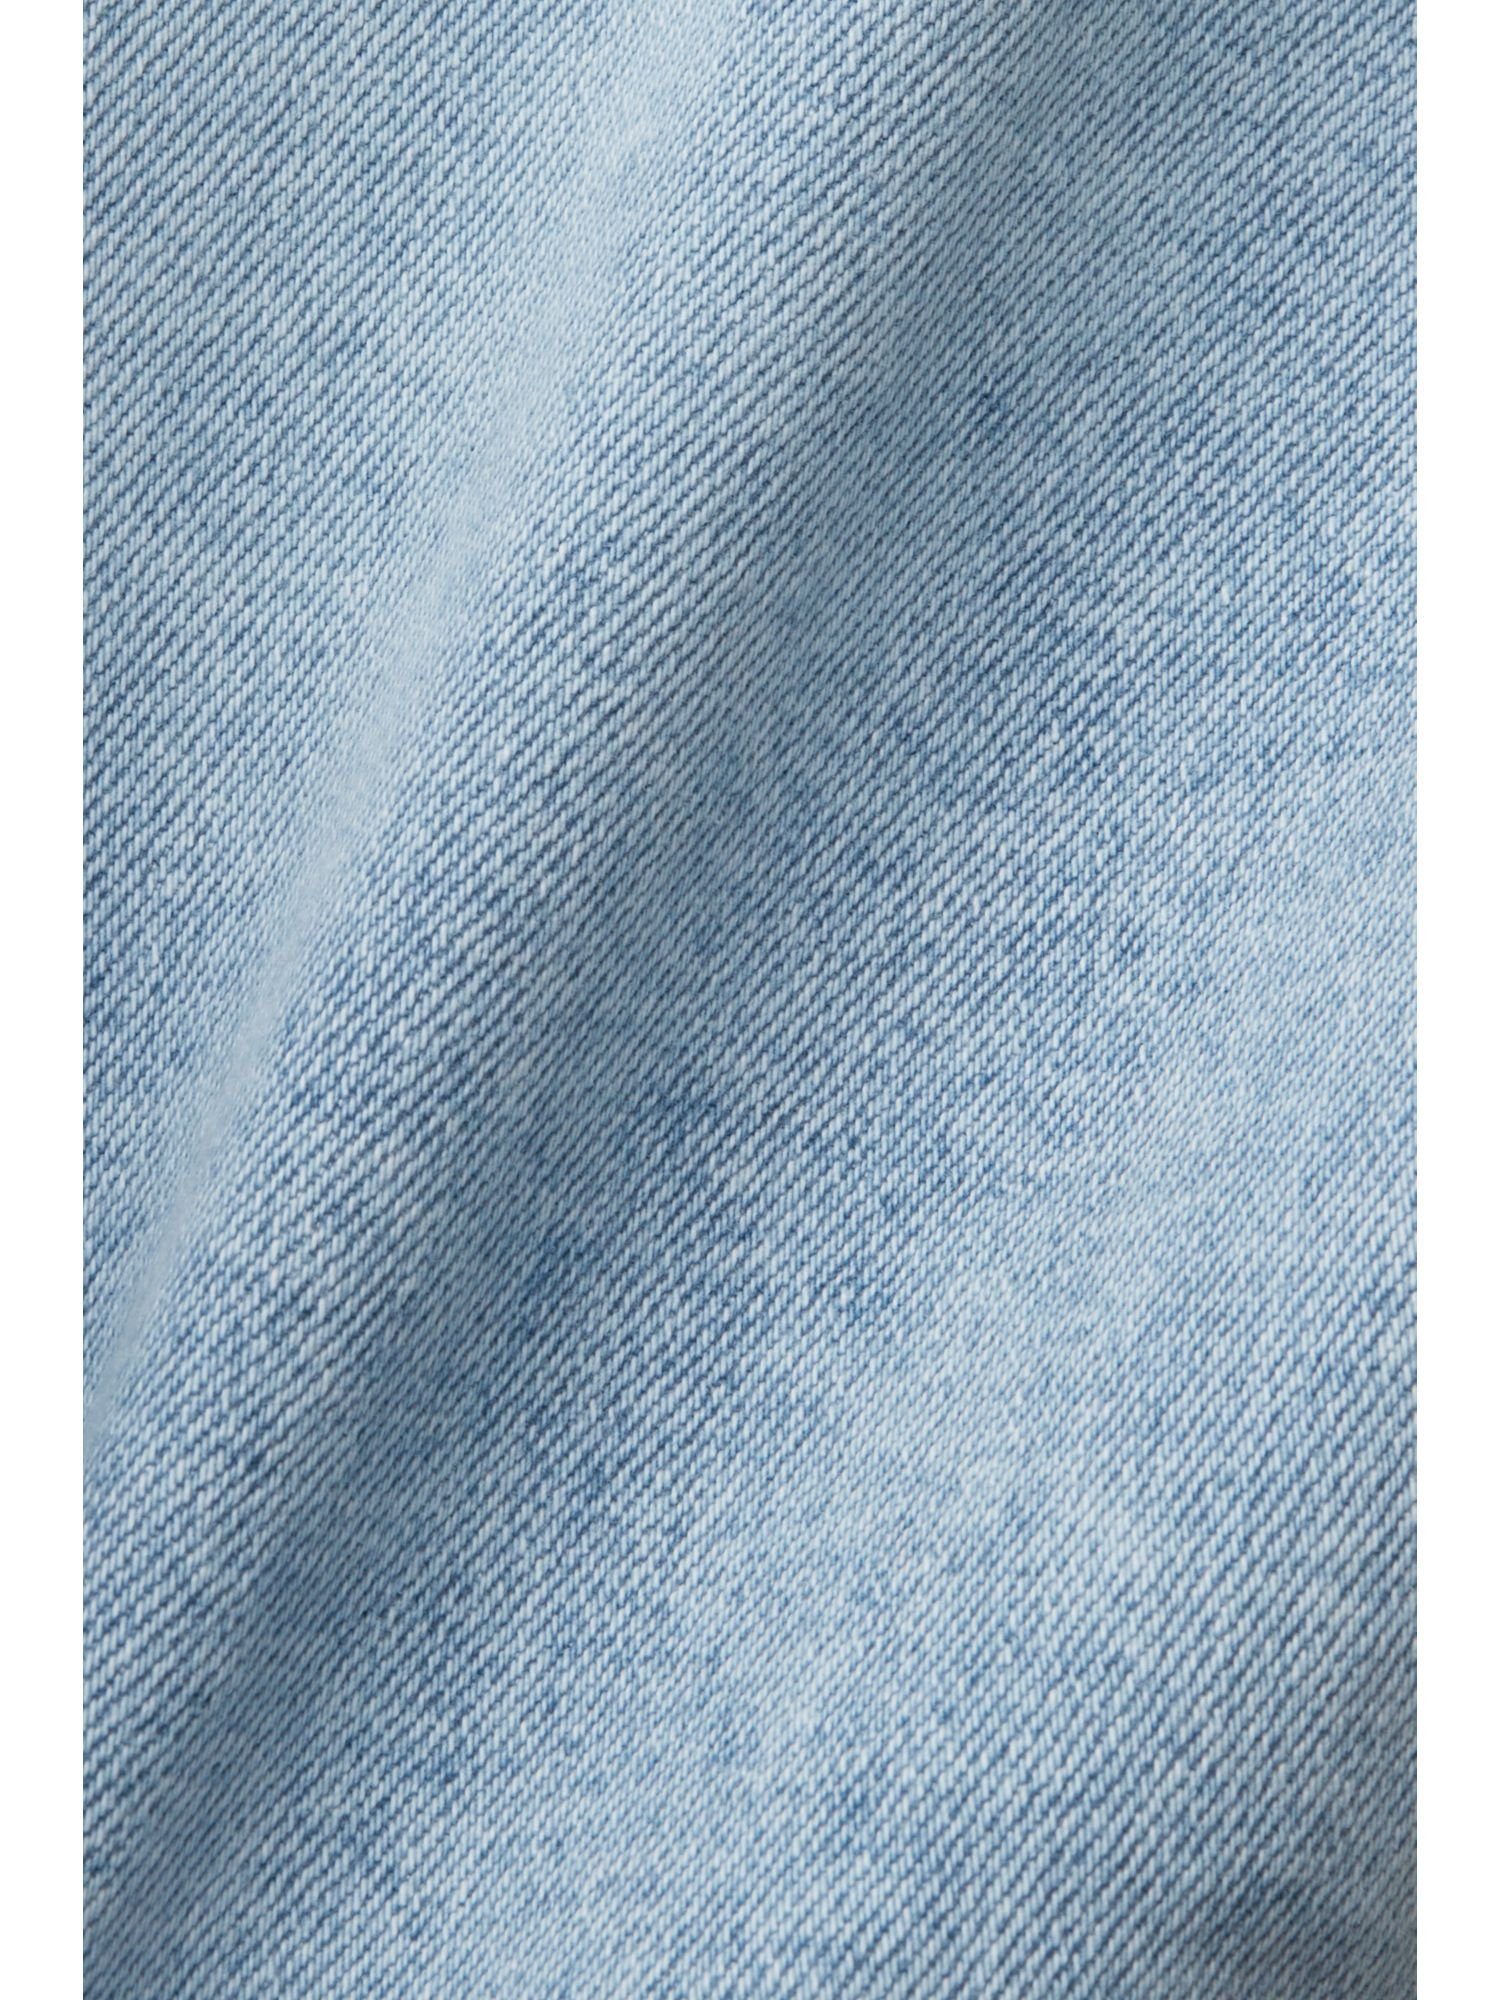 BLUE Esprit in Passform Jeansshorts schmaler LIGHT Lockere WASHED Jeansshorts